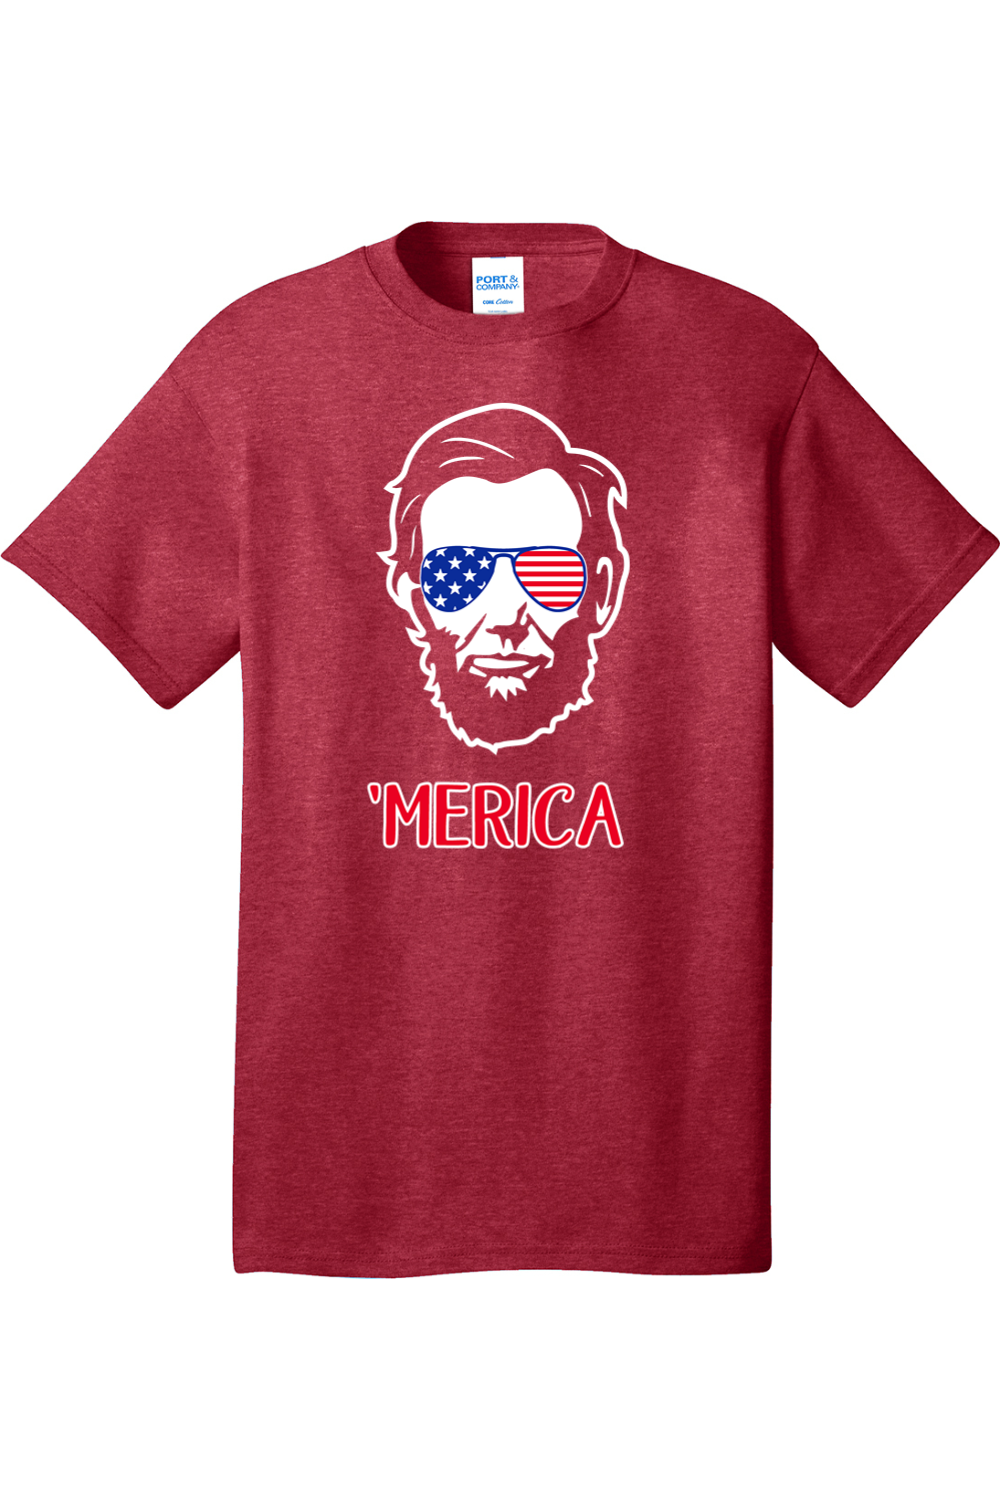 Merica Abraham Lincoln Version | Mens Big and Tall Short Sleeve T-Shirt